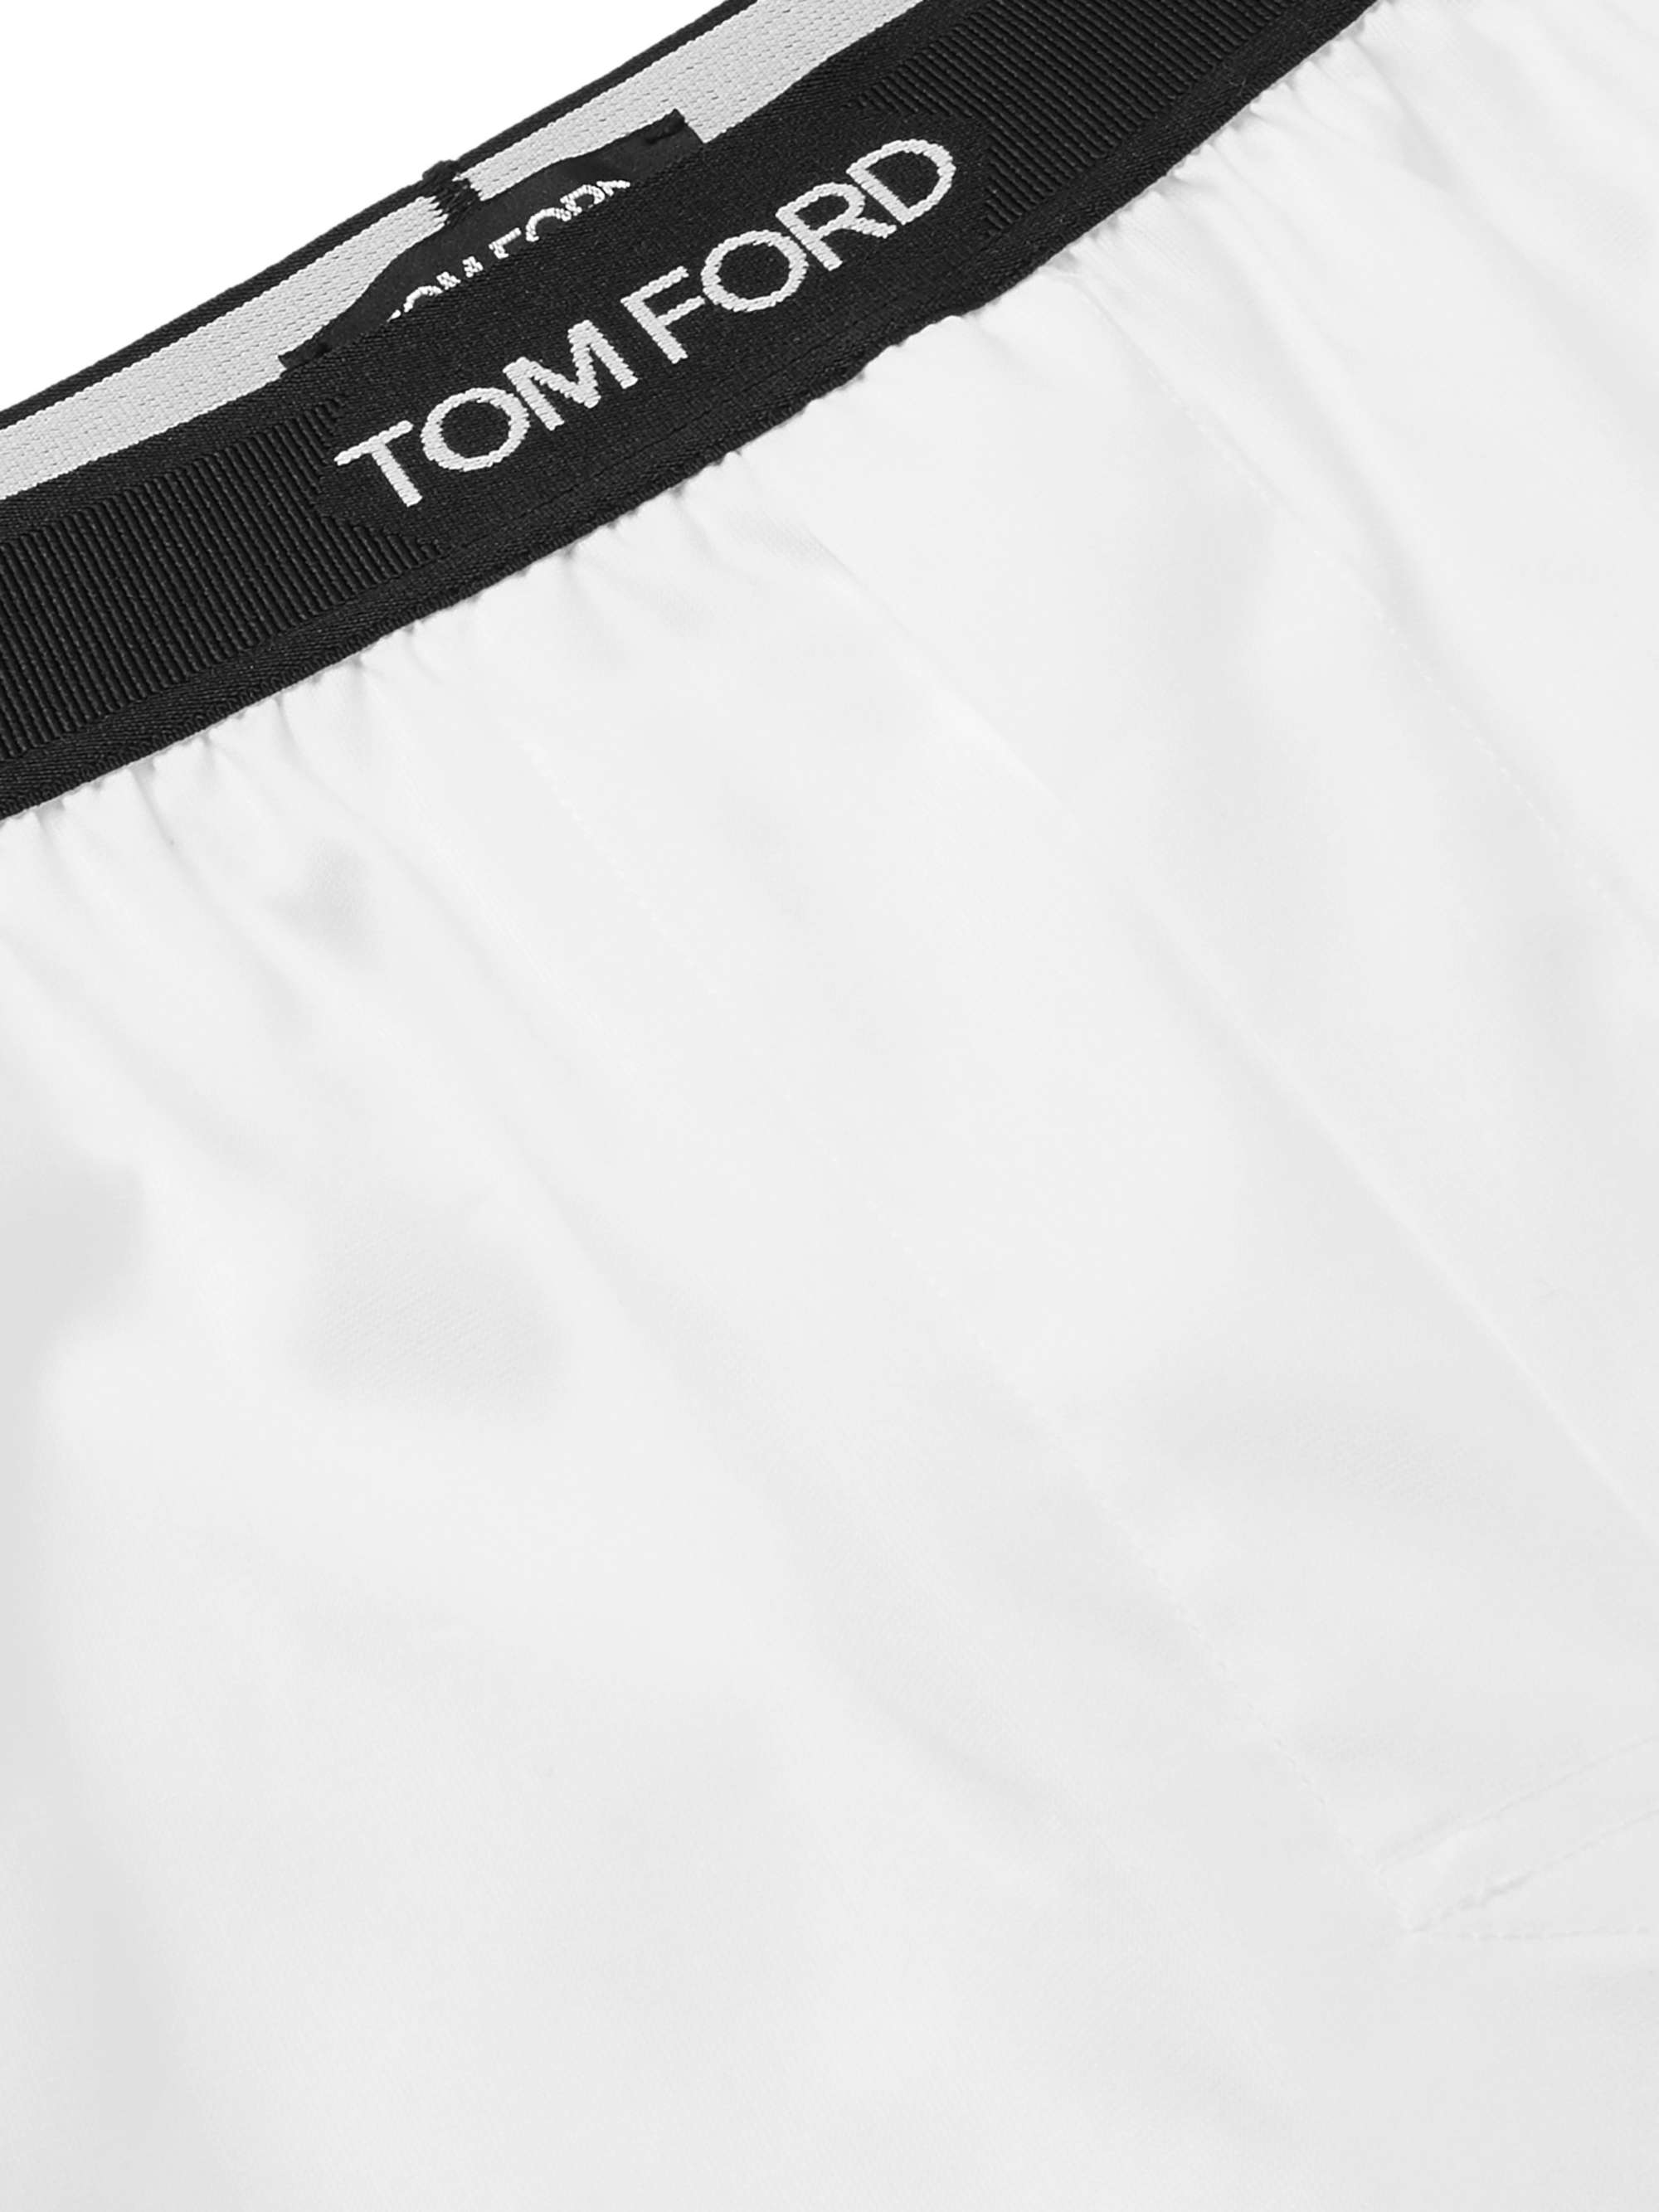 TOM FORD Grosgrain-Trimmed Cotton Boxer Shorts